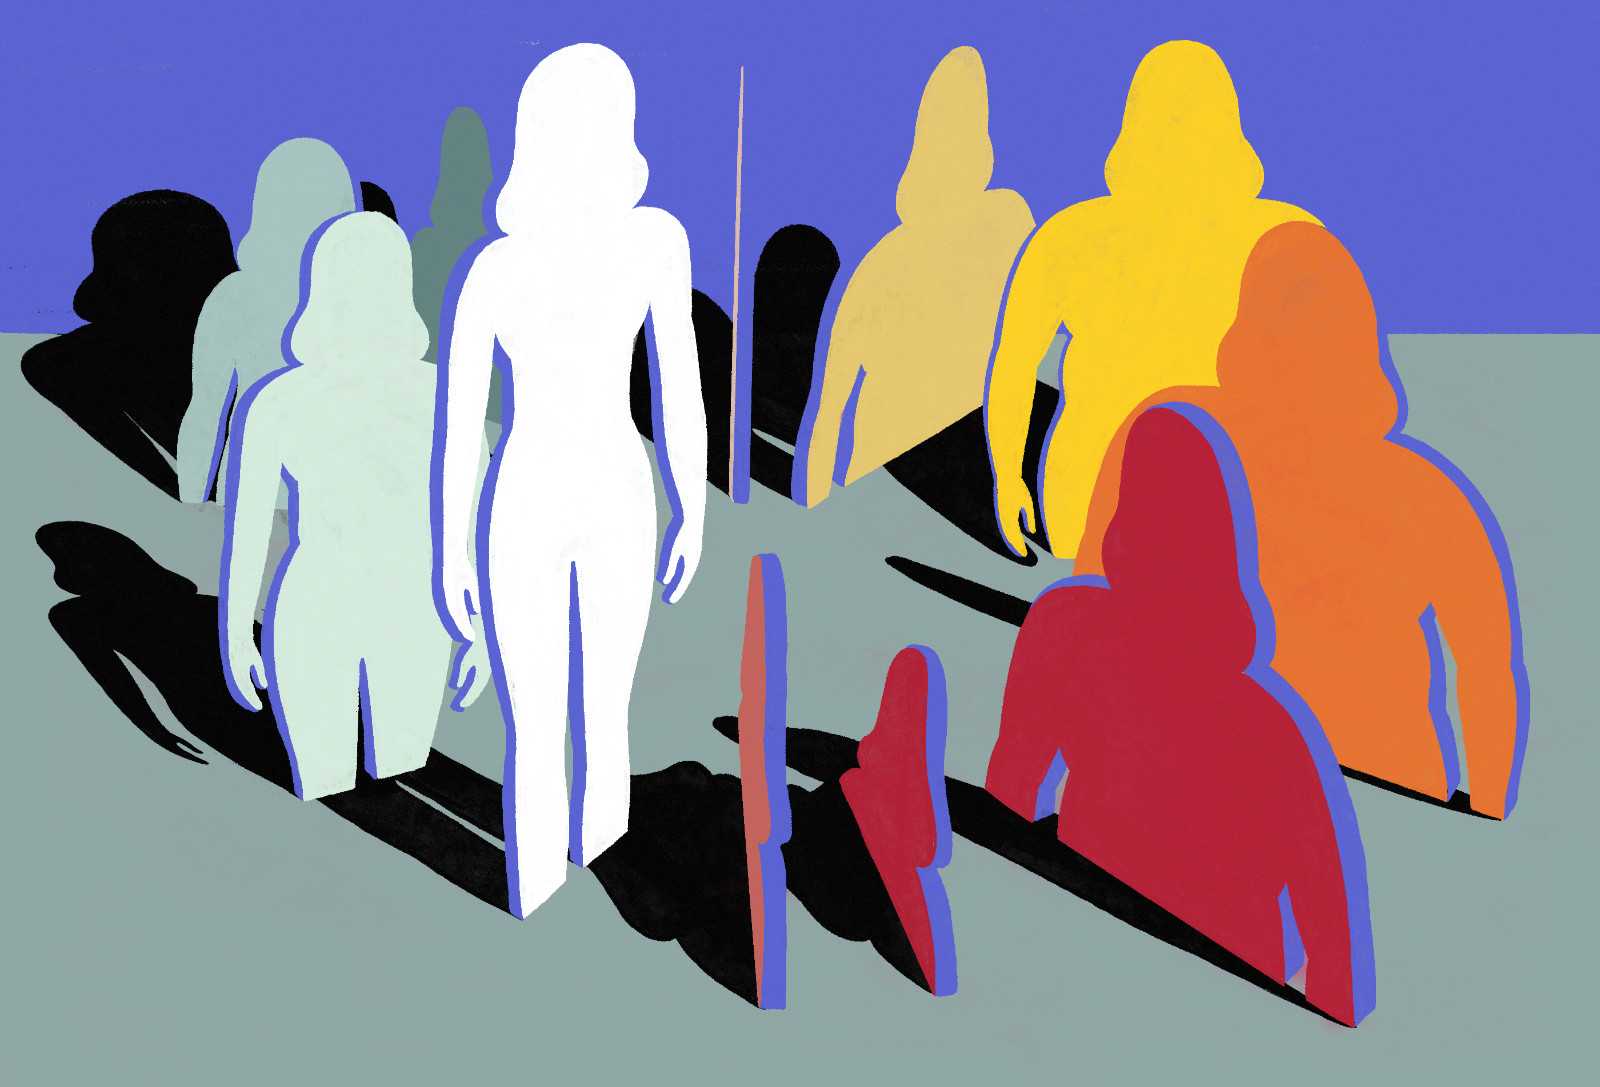 Cutouts of female figures